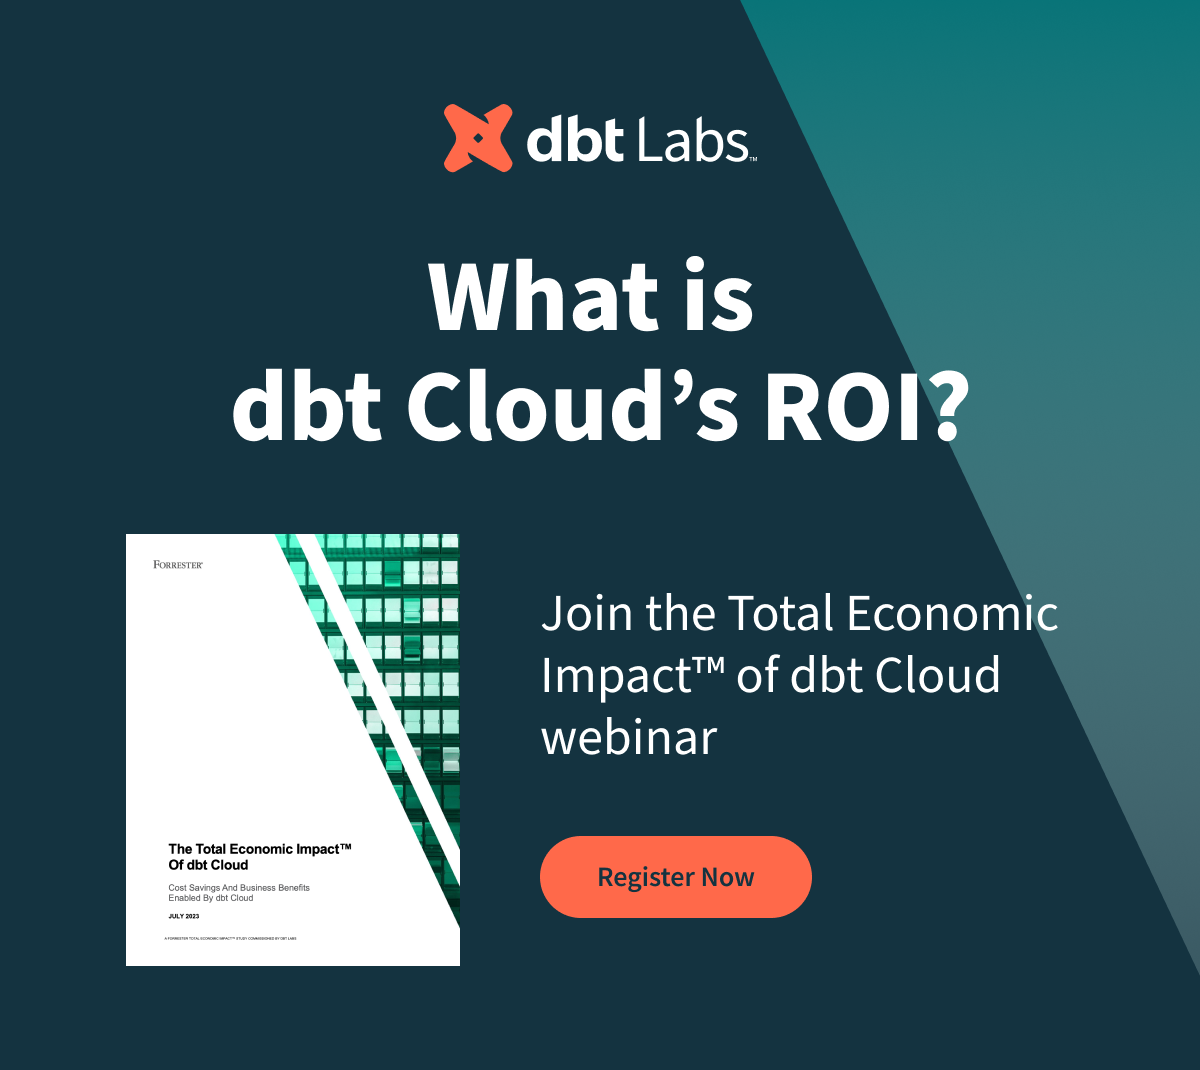 The ROI of dbt Cloud